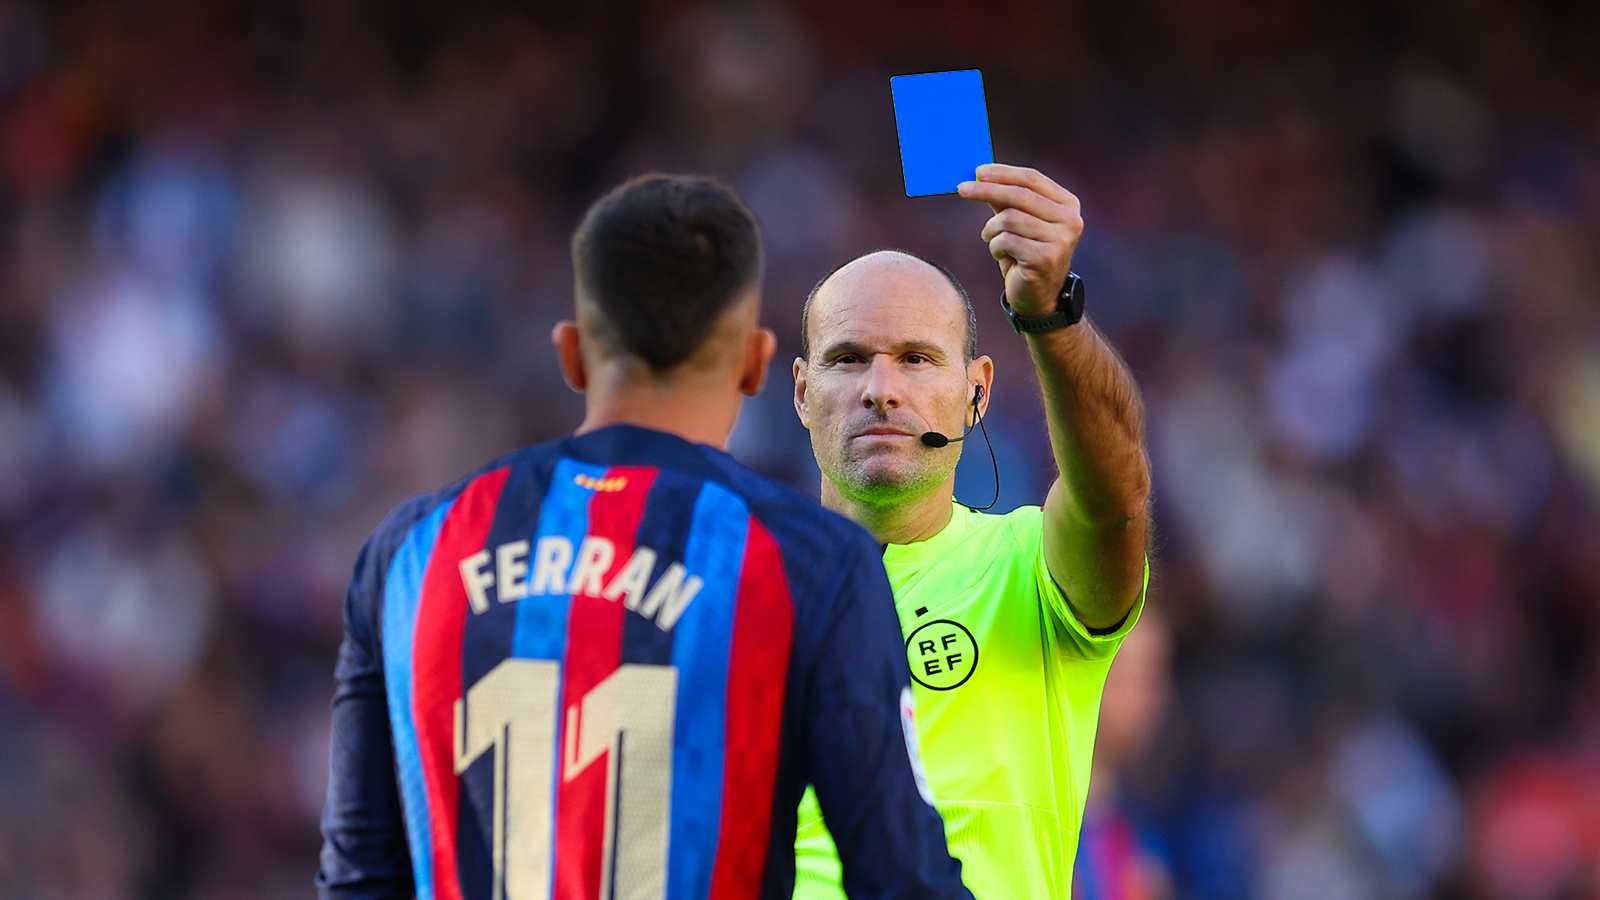 Soccer ref holding blue card